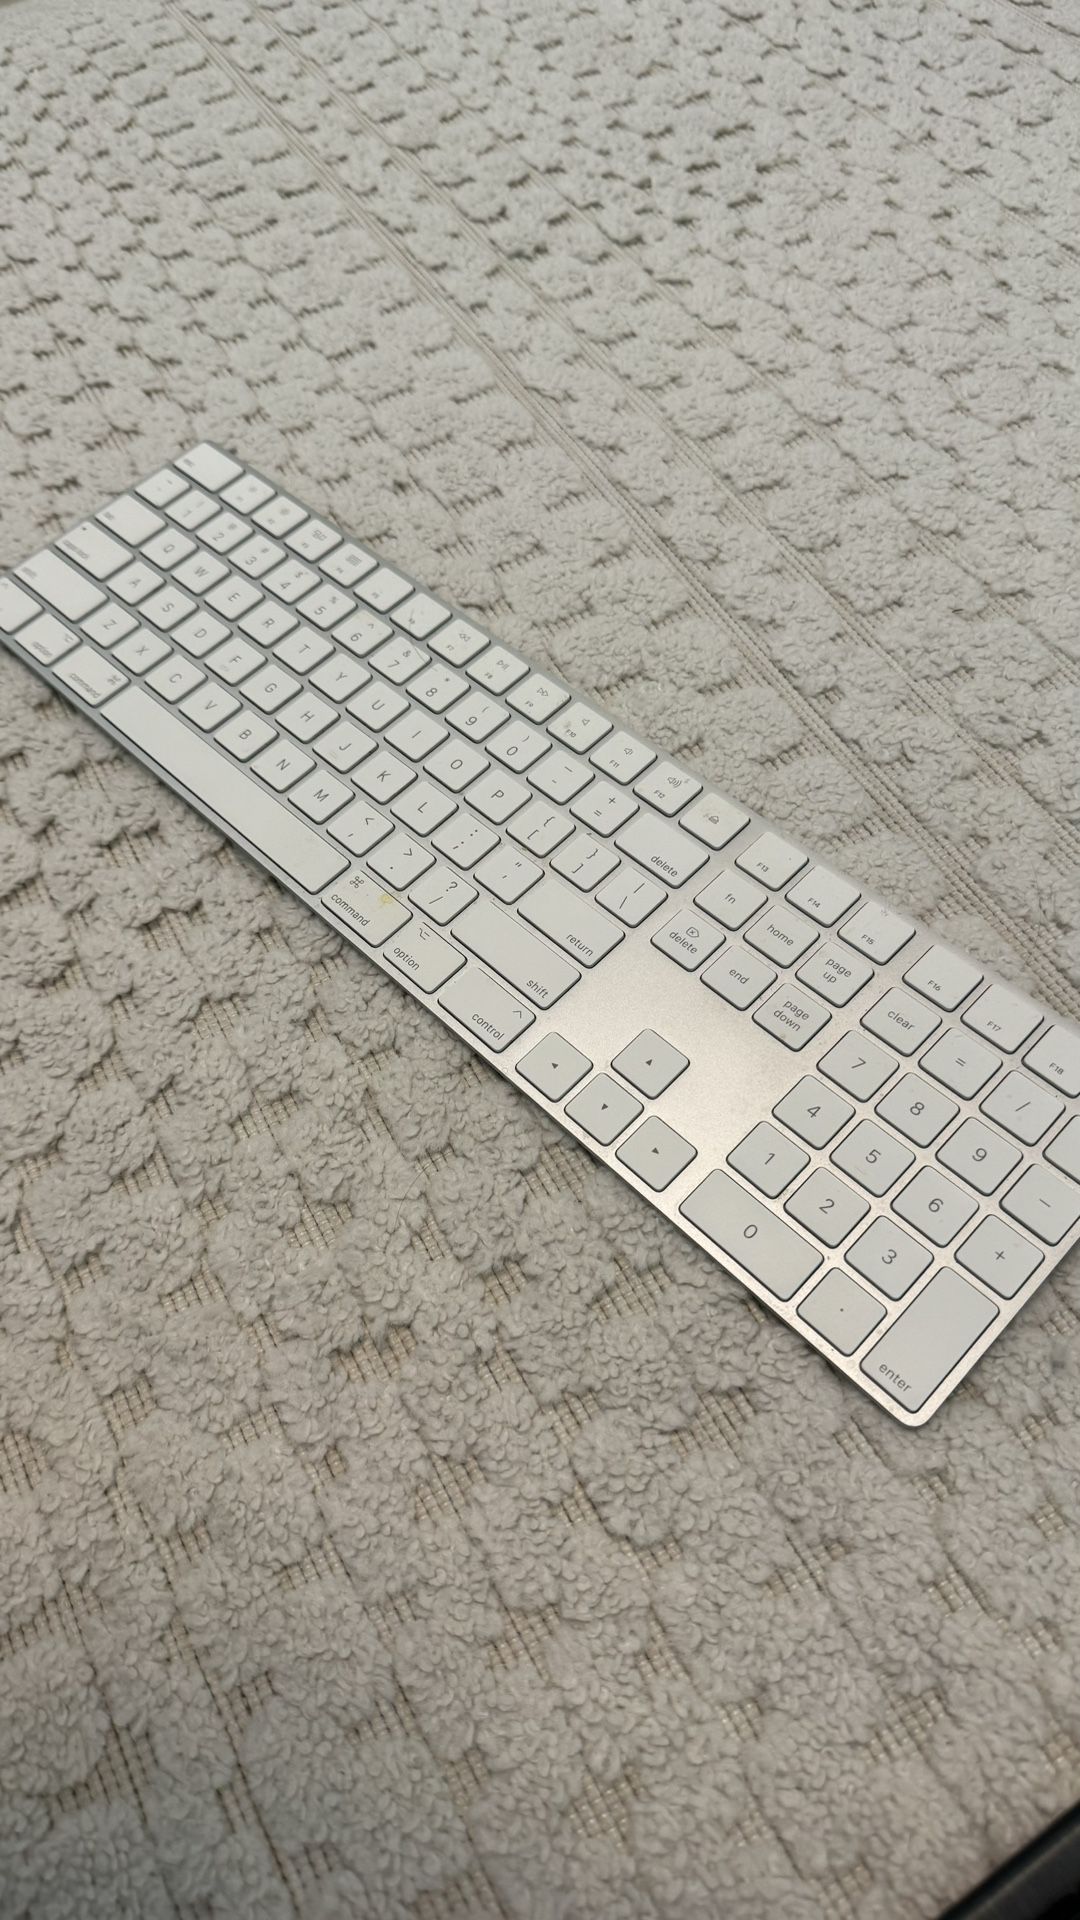 Apple Bluetooth Keyboard 